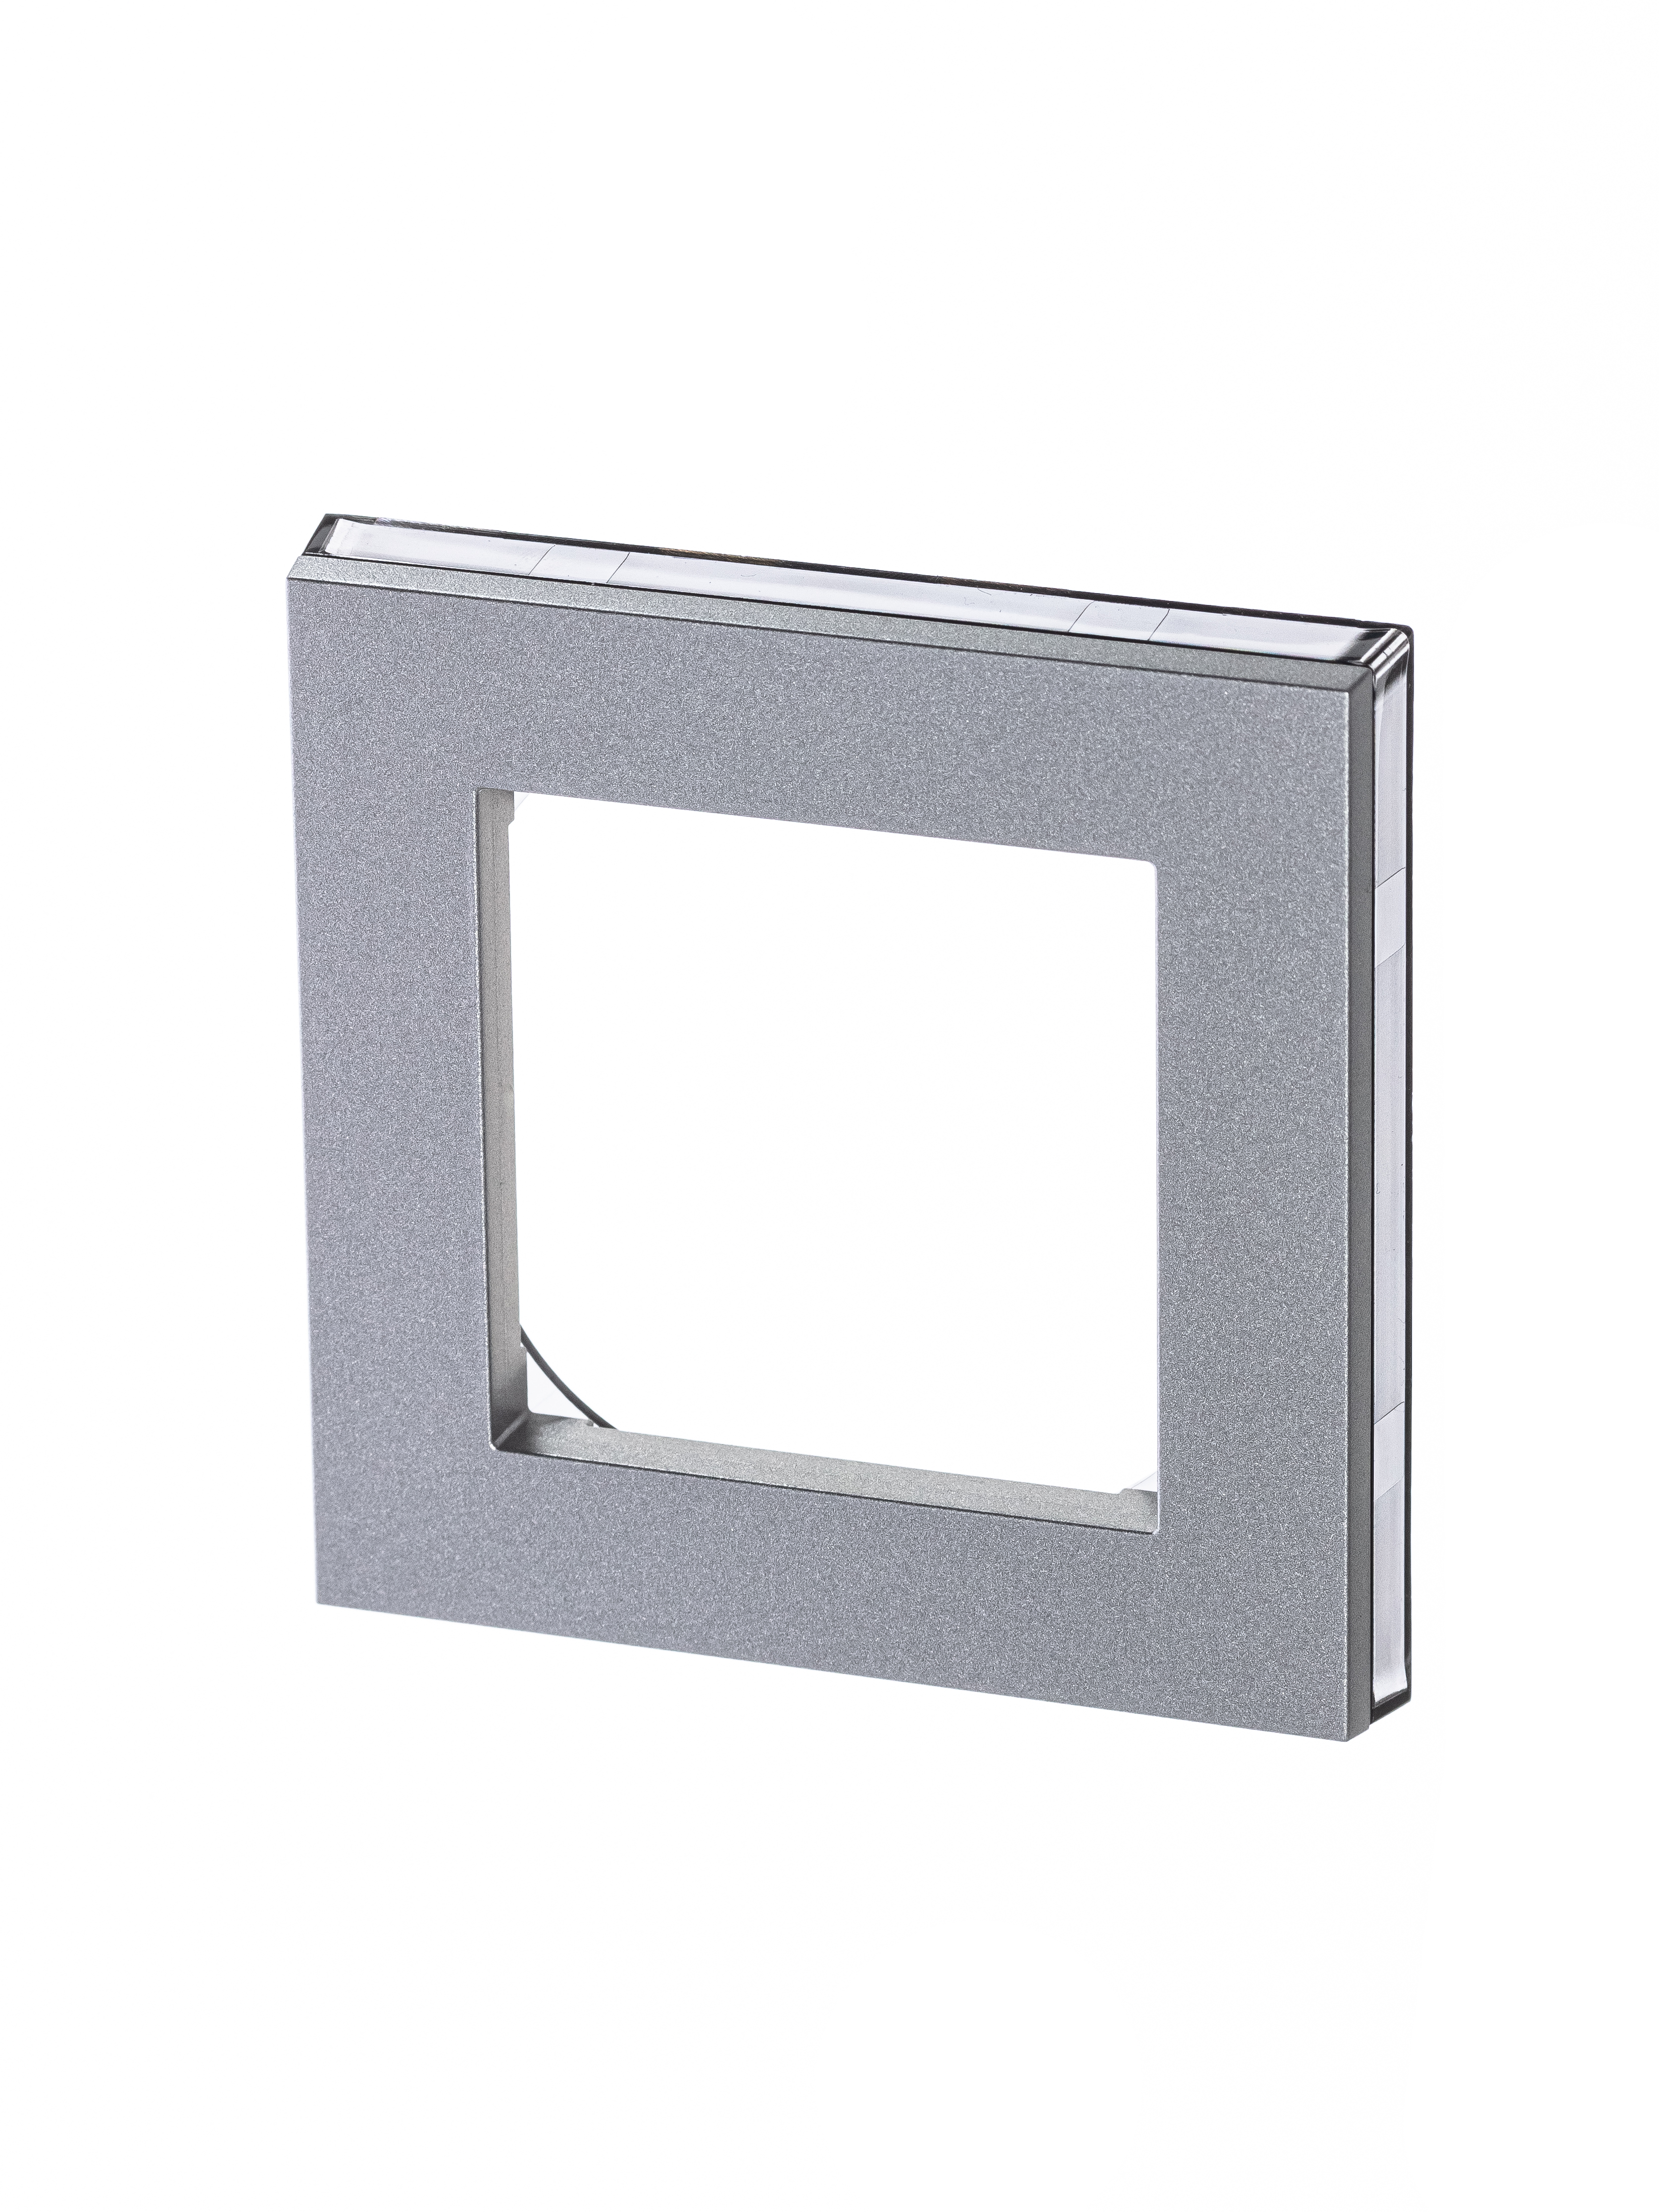 Рамка для розеток и выключателей 1 пост LEVIT серебро / дымчатый чёрный 2CHH015010A6070 ABB (30м)